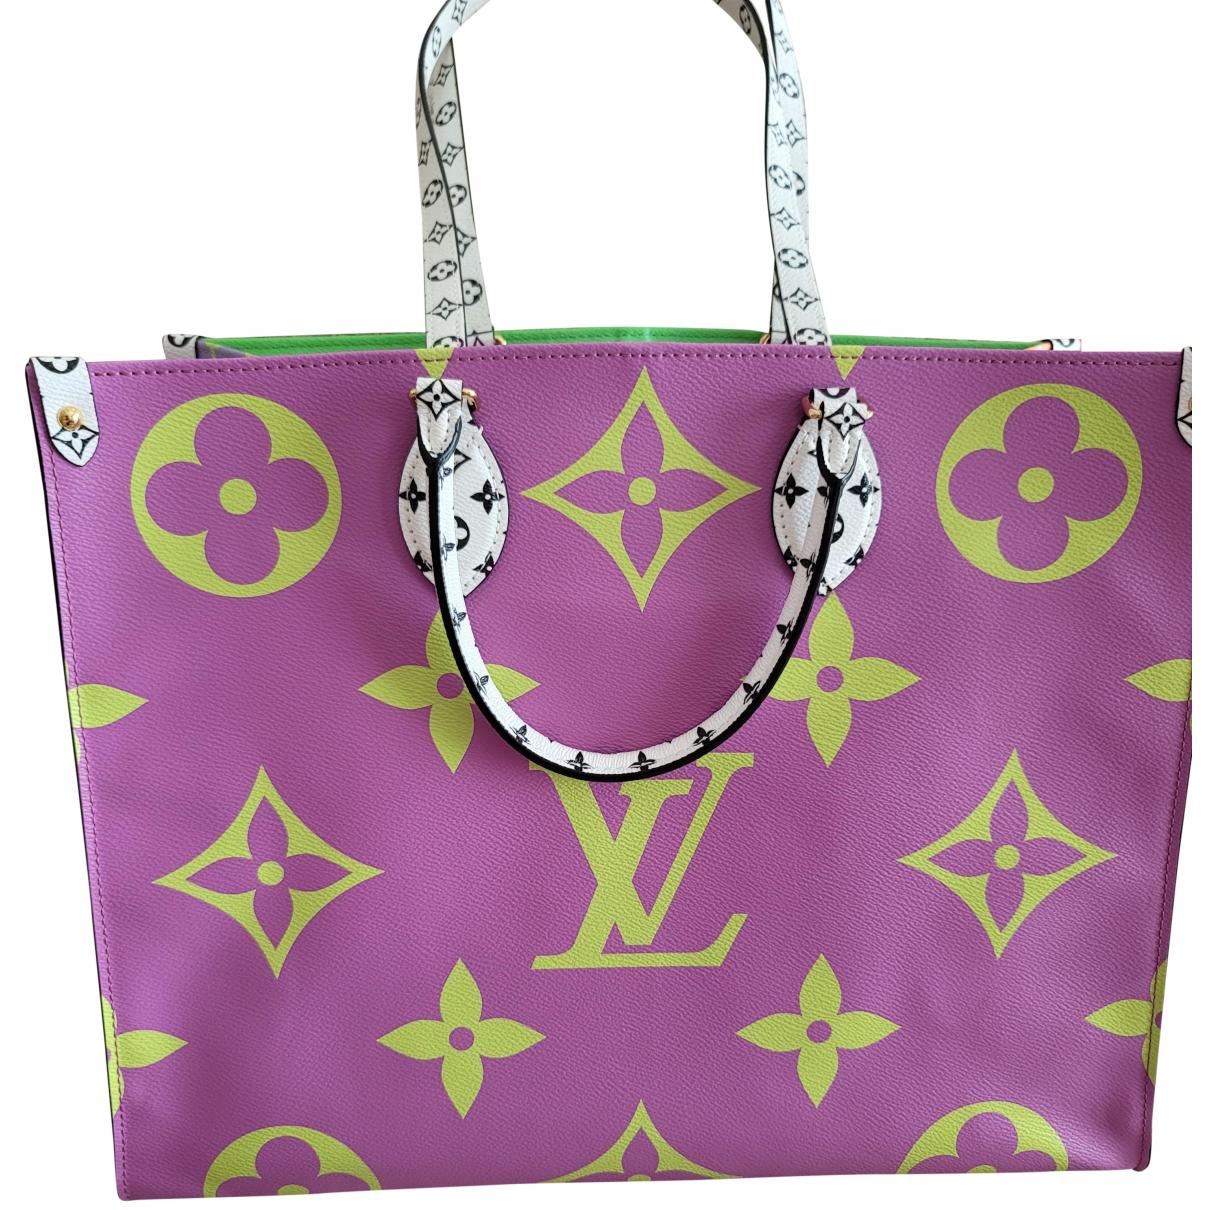 Louis Vuitton Women's Purple Tote Bags